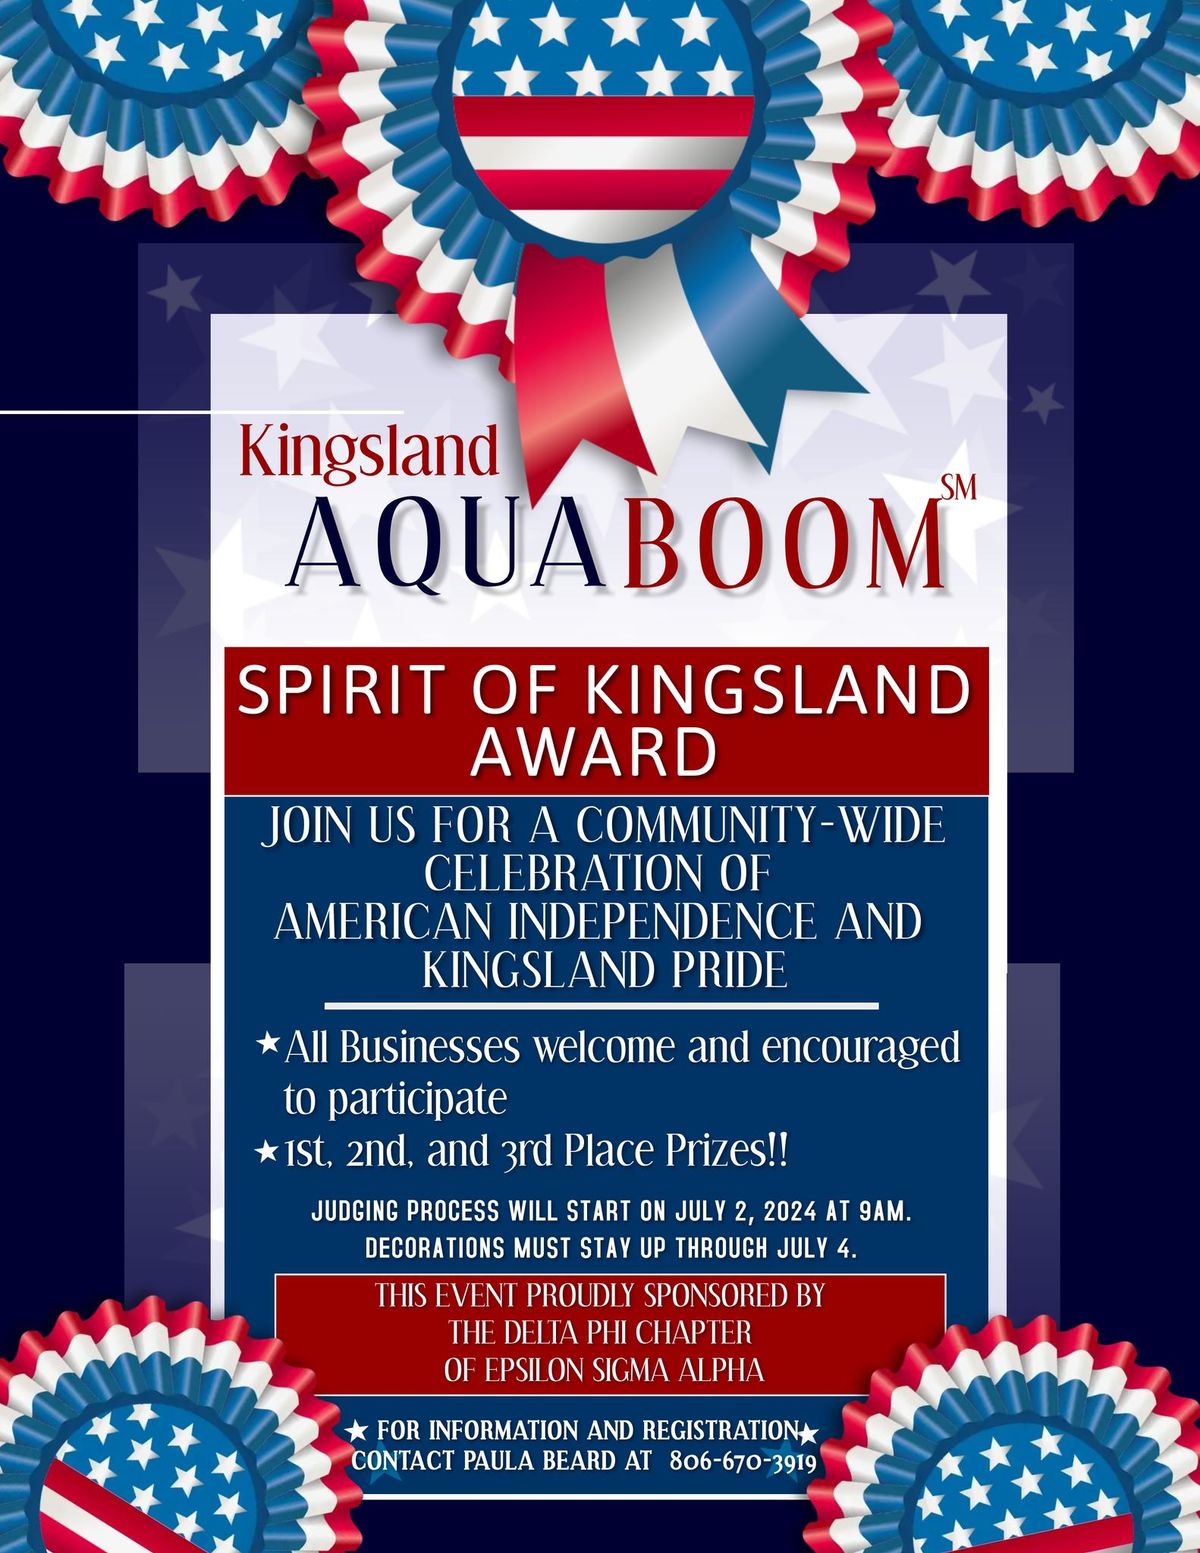 8TH Annual AquaBoom Spirit of Kingsland Award